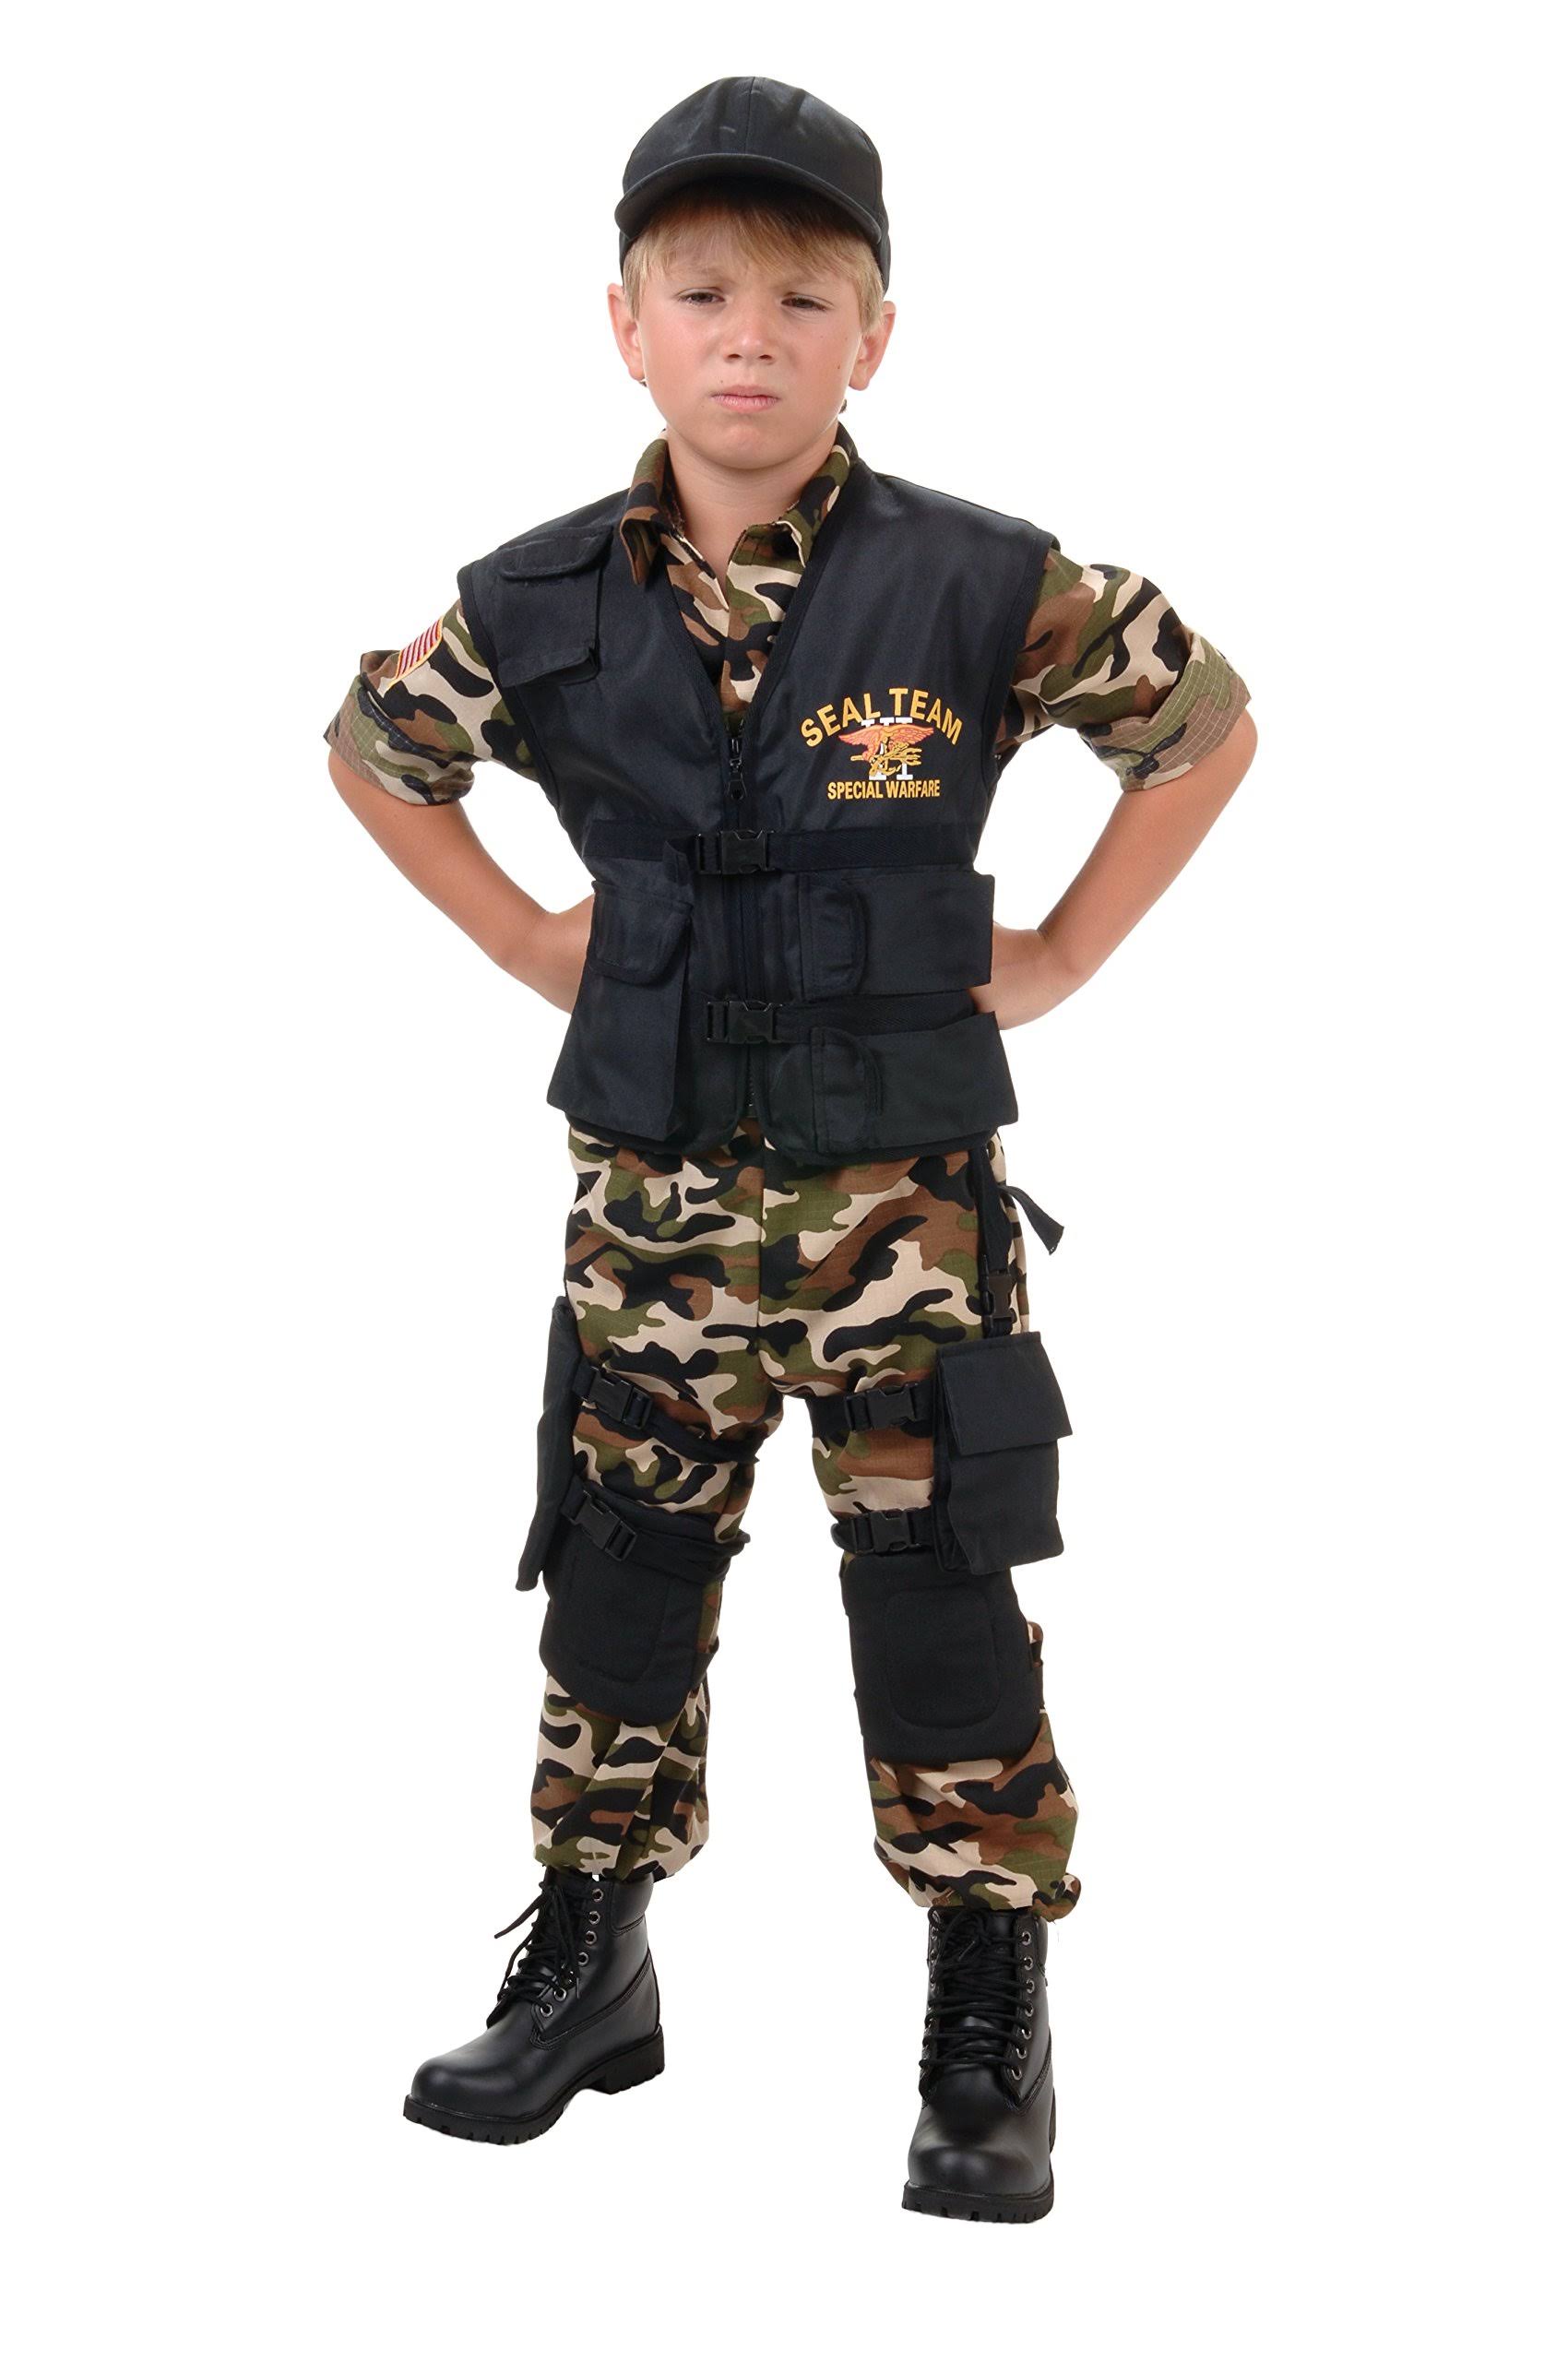 Child Navy Seal Team Deluxe Costume - HJ-1-s